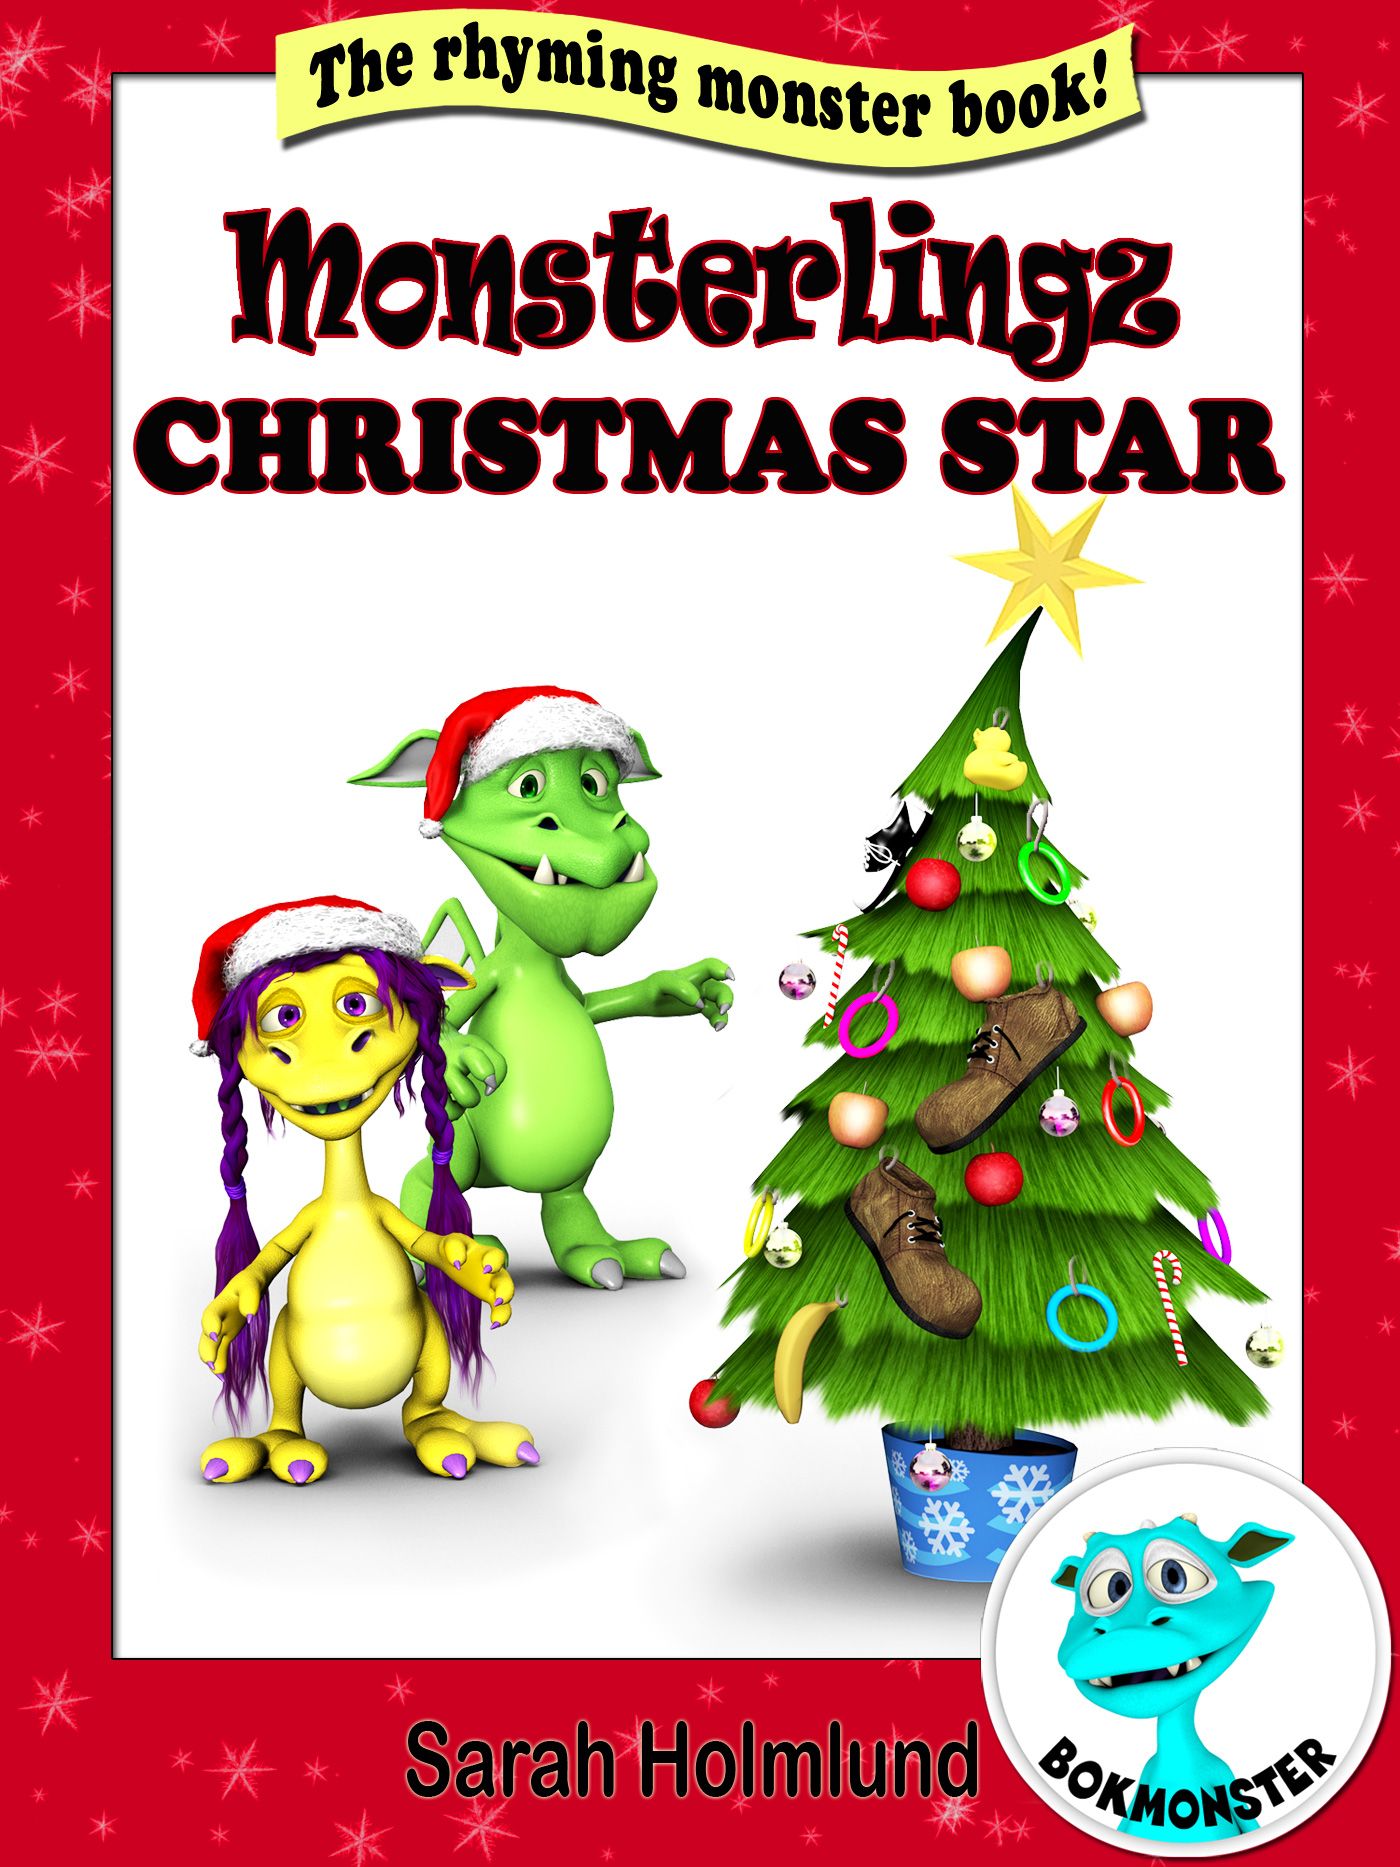 Monsterlingz Christmas star, eBook by Sarah Holmlund